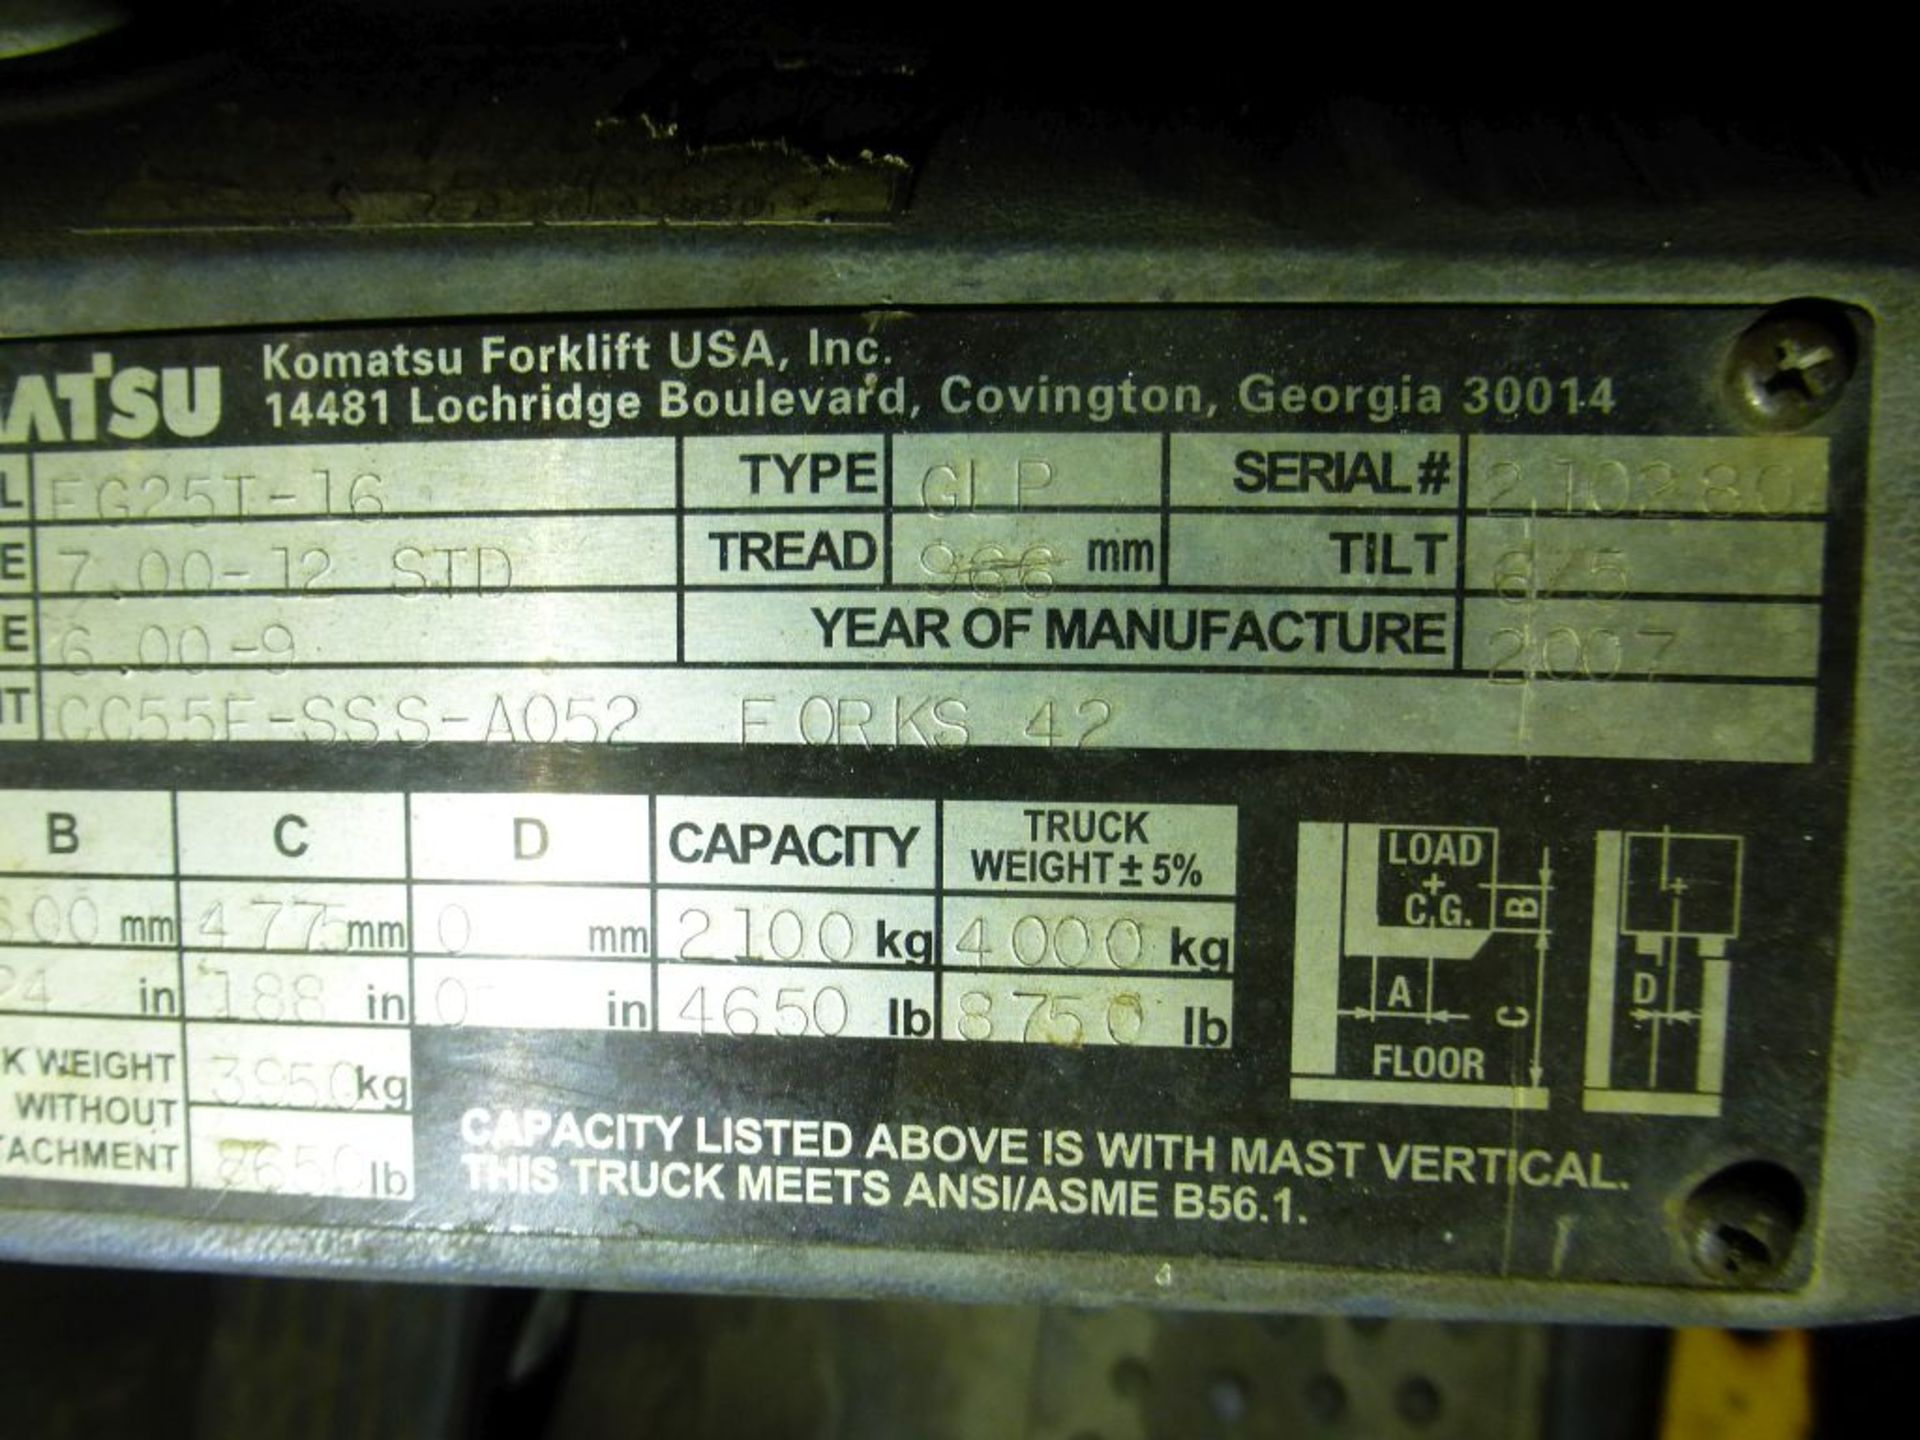 Komatsu 25-Gallon Forklift | Model No. FG25T-16; Serial No. 210280A; 4650 lb Cap; 188" Lifting - Image 19 of 19